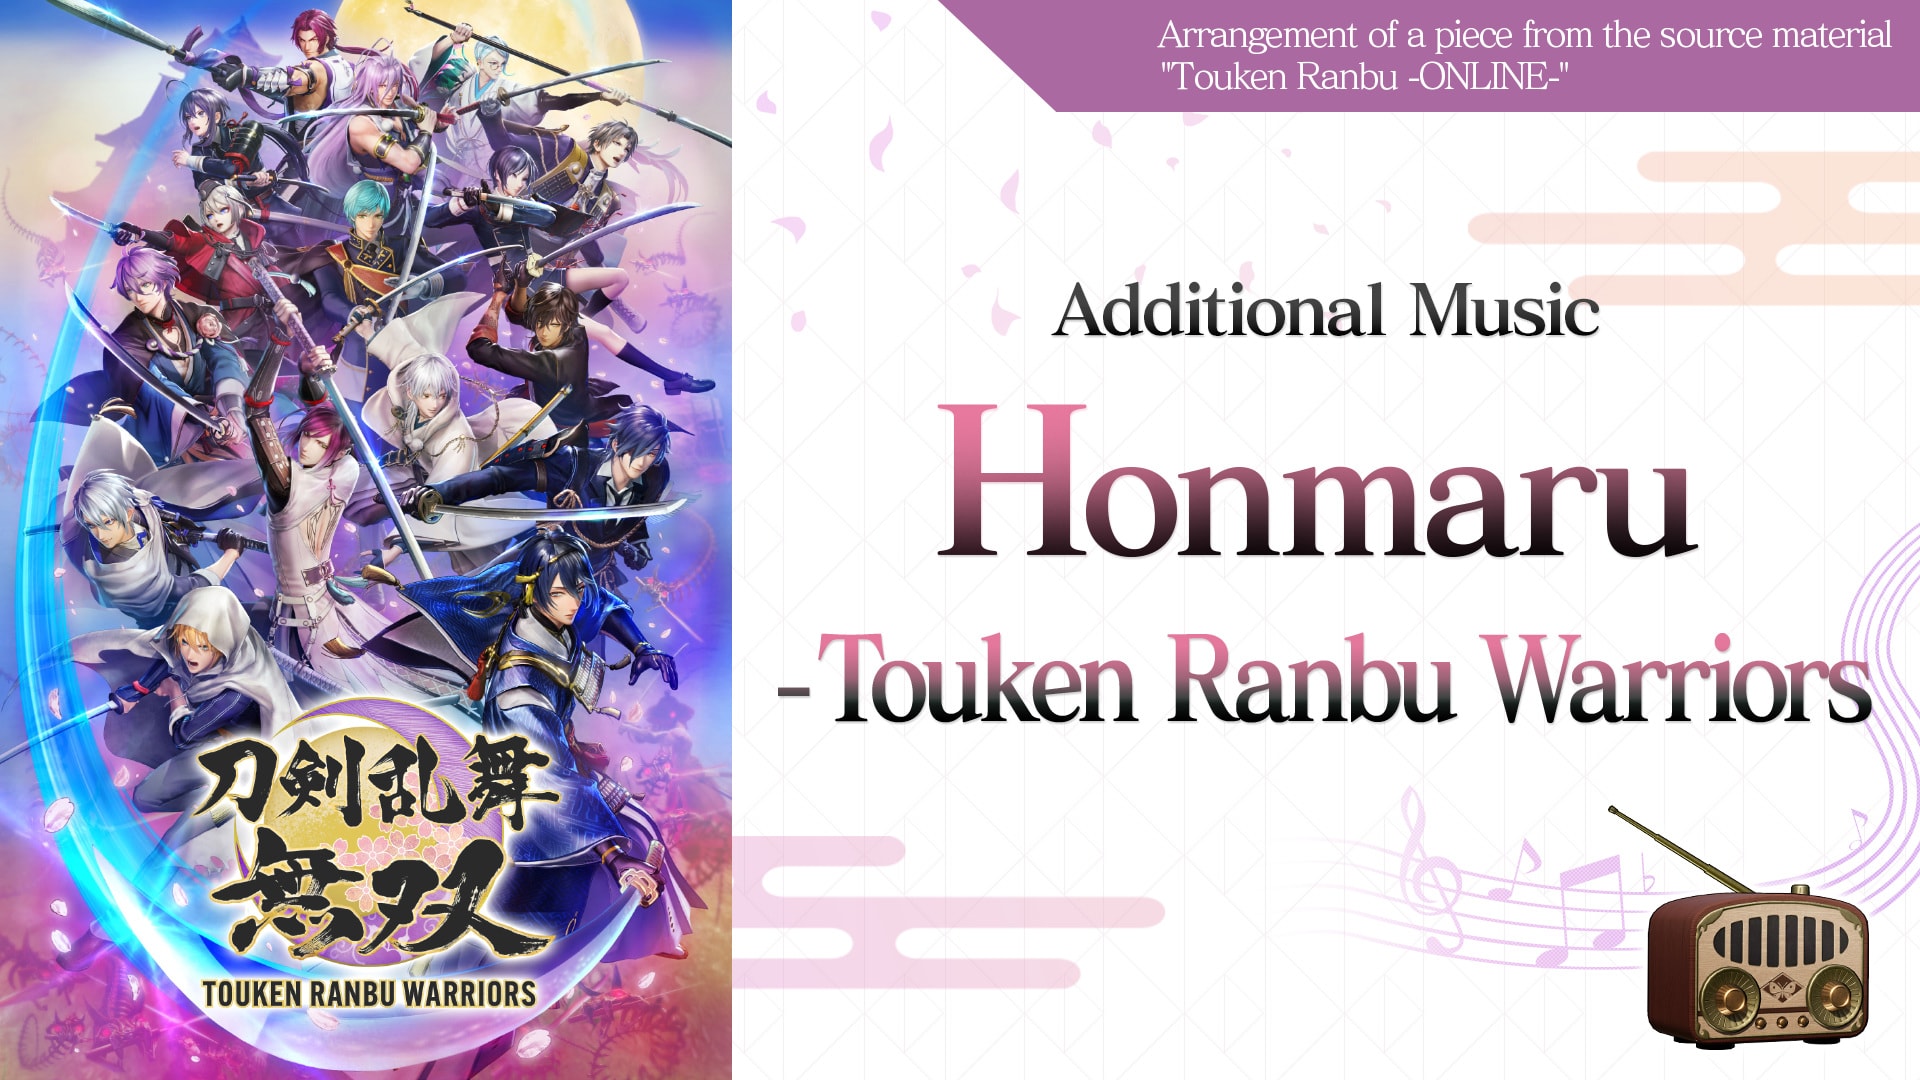 Additional Music "Honmaru - Touken Ranbu Warriors"